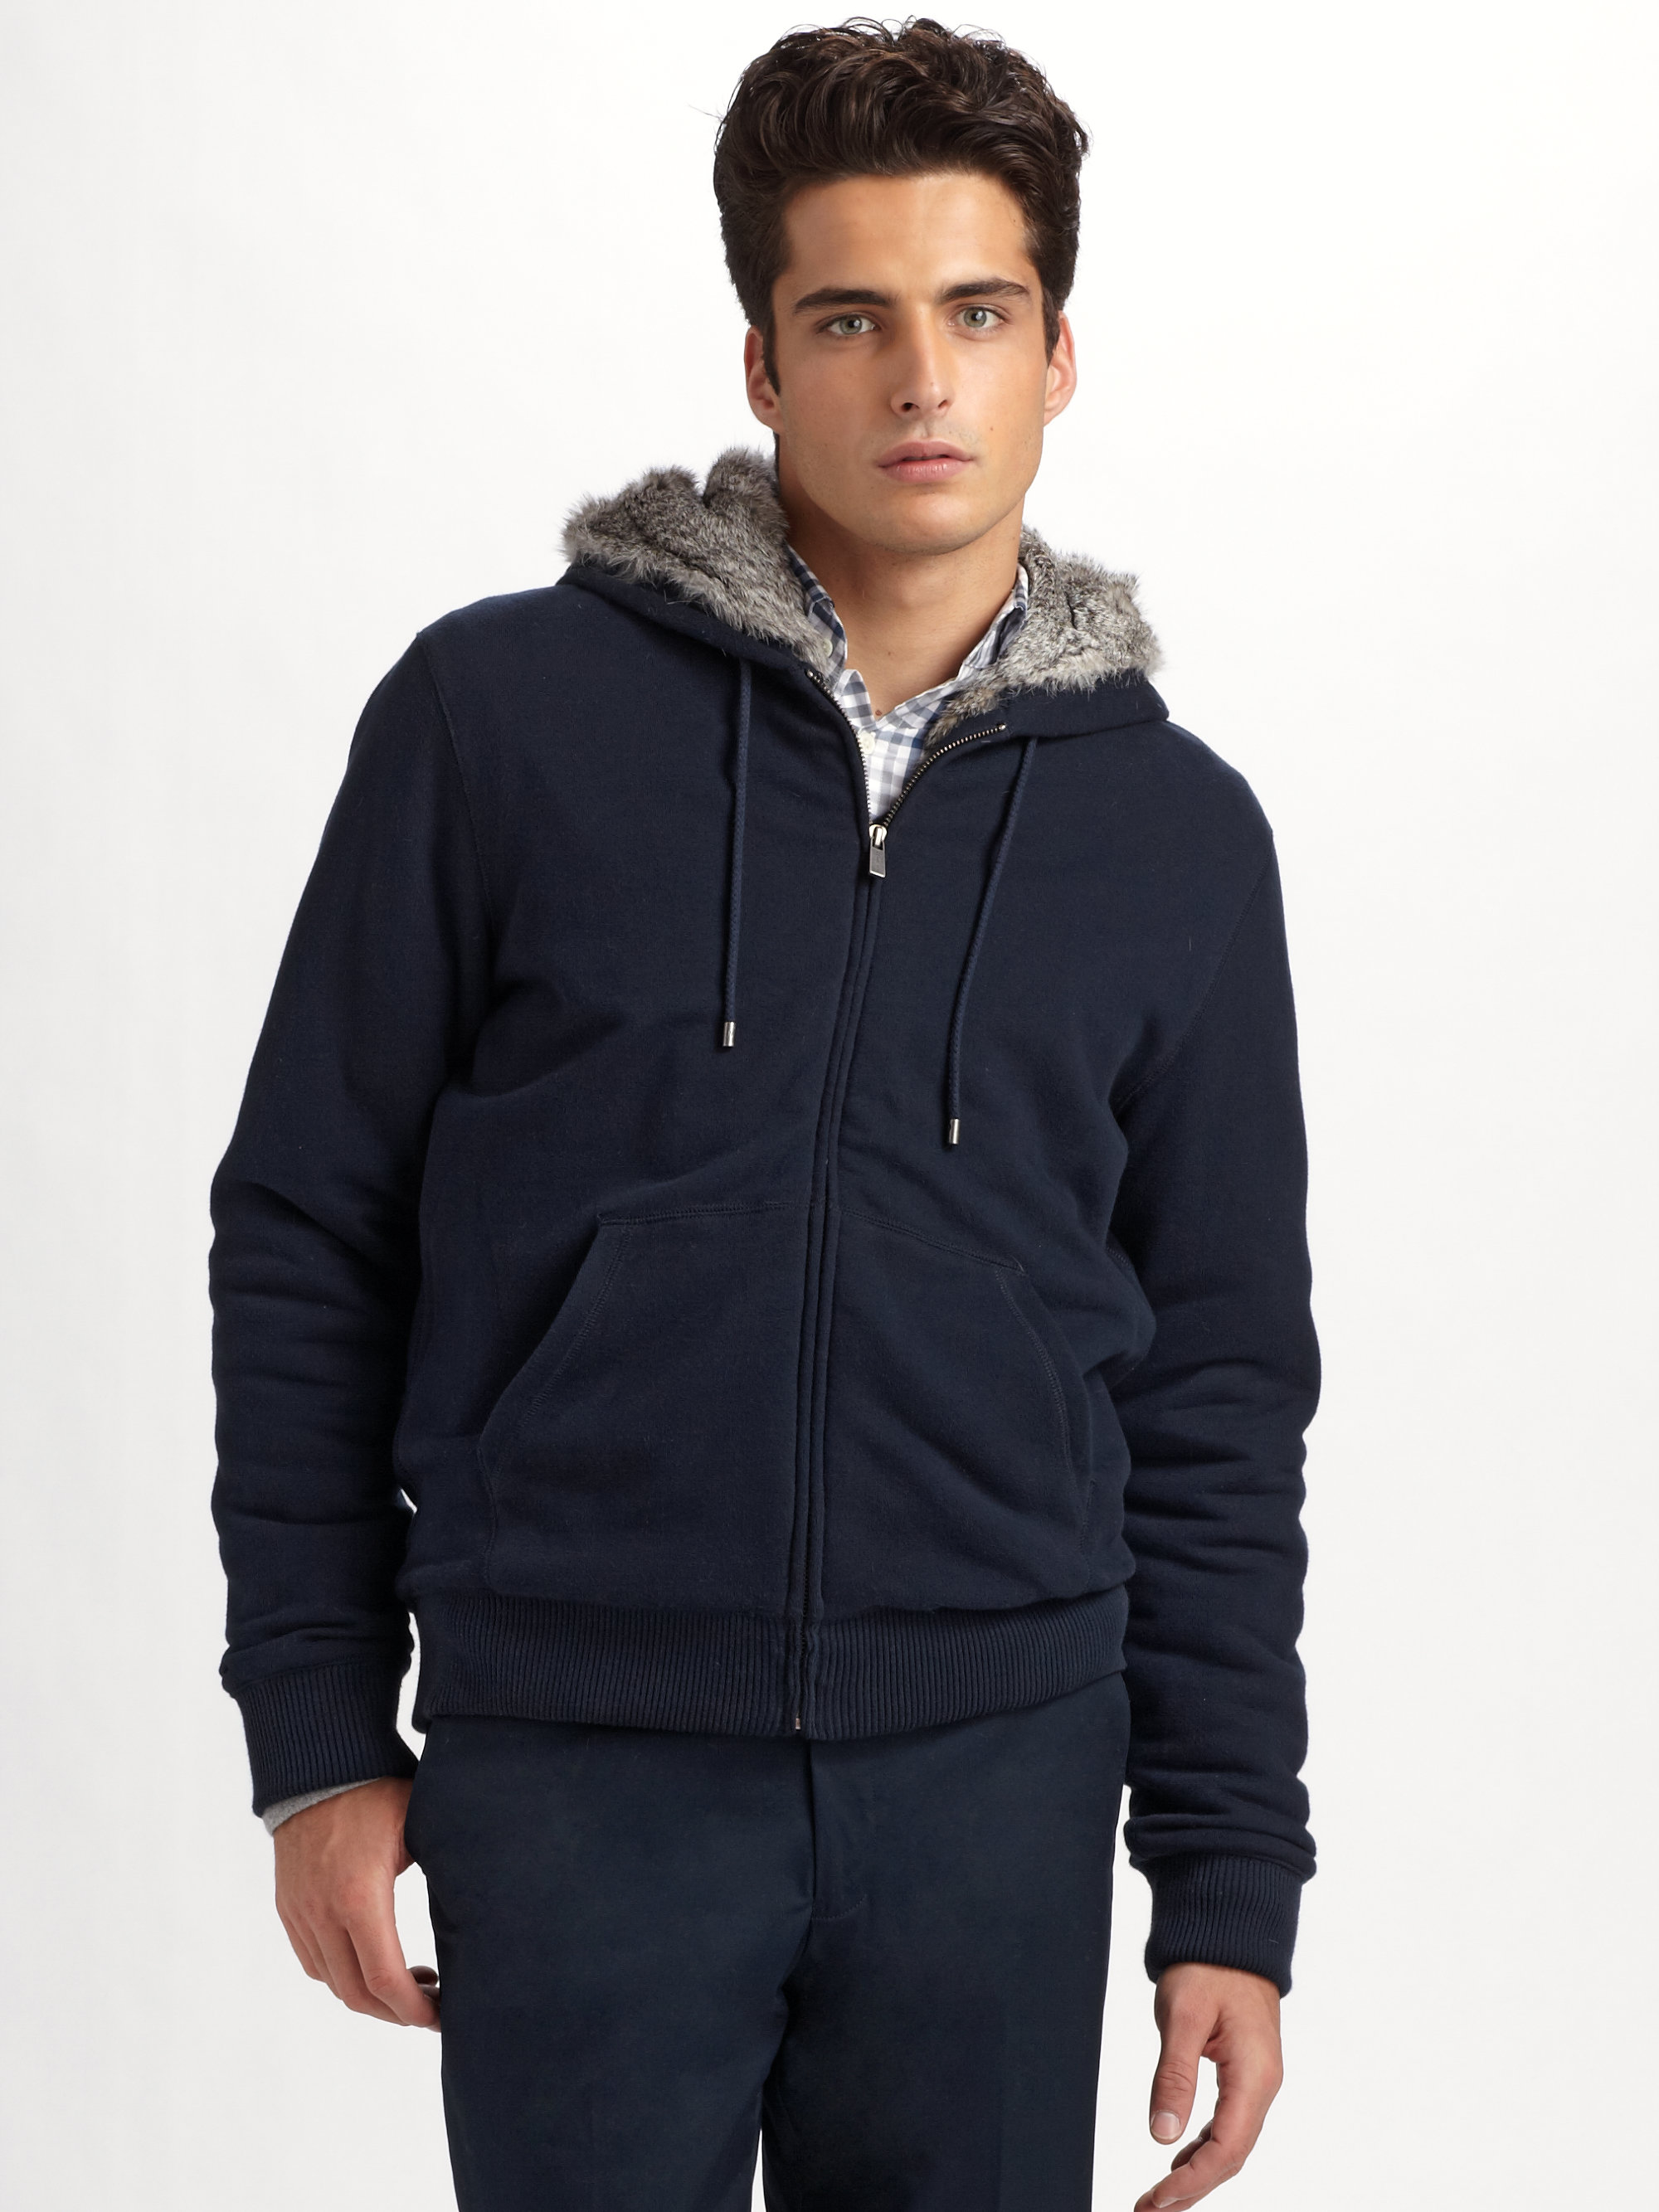 michael kors fleece lined hoodie